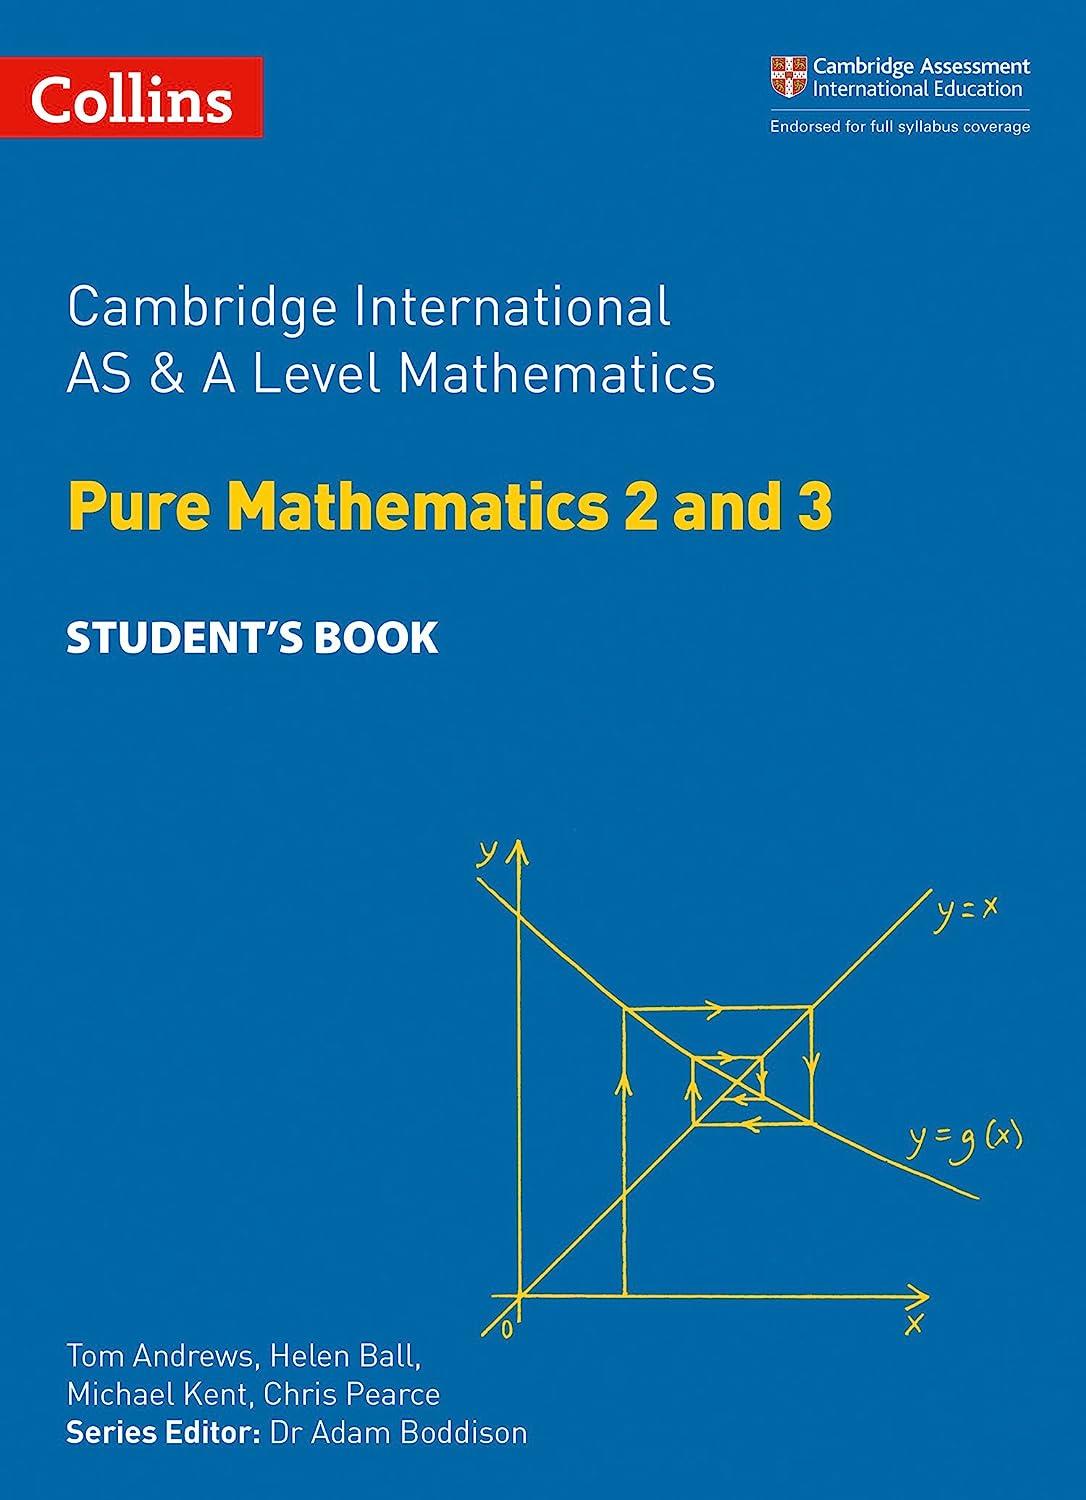 cambridge international as and a level mathematics pure mathematics 2 and 3 student book 1st edition tom